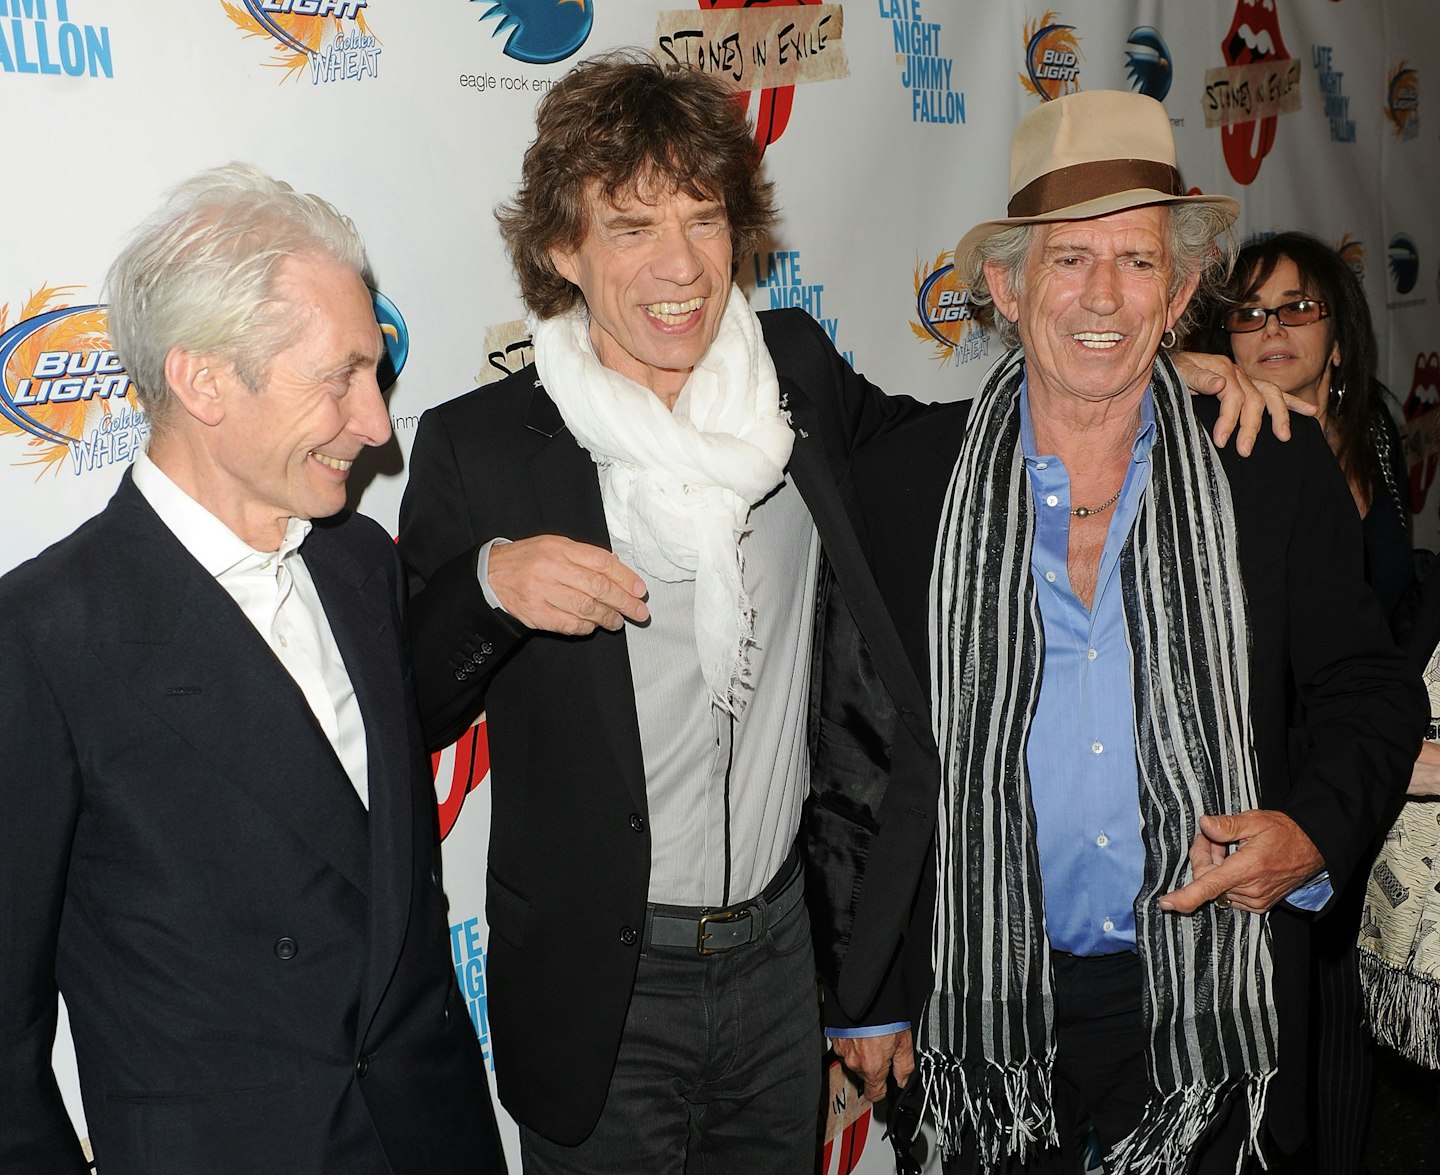 Charlie Watts, Mick Jagger, Keith Richards